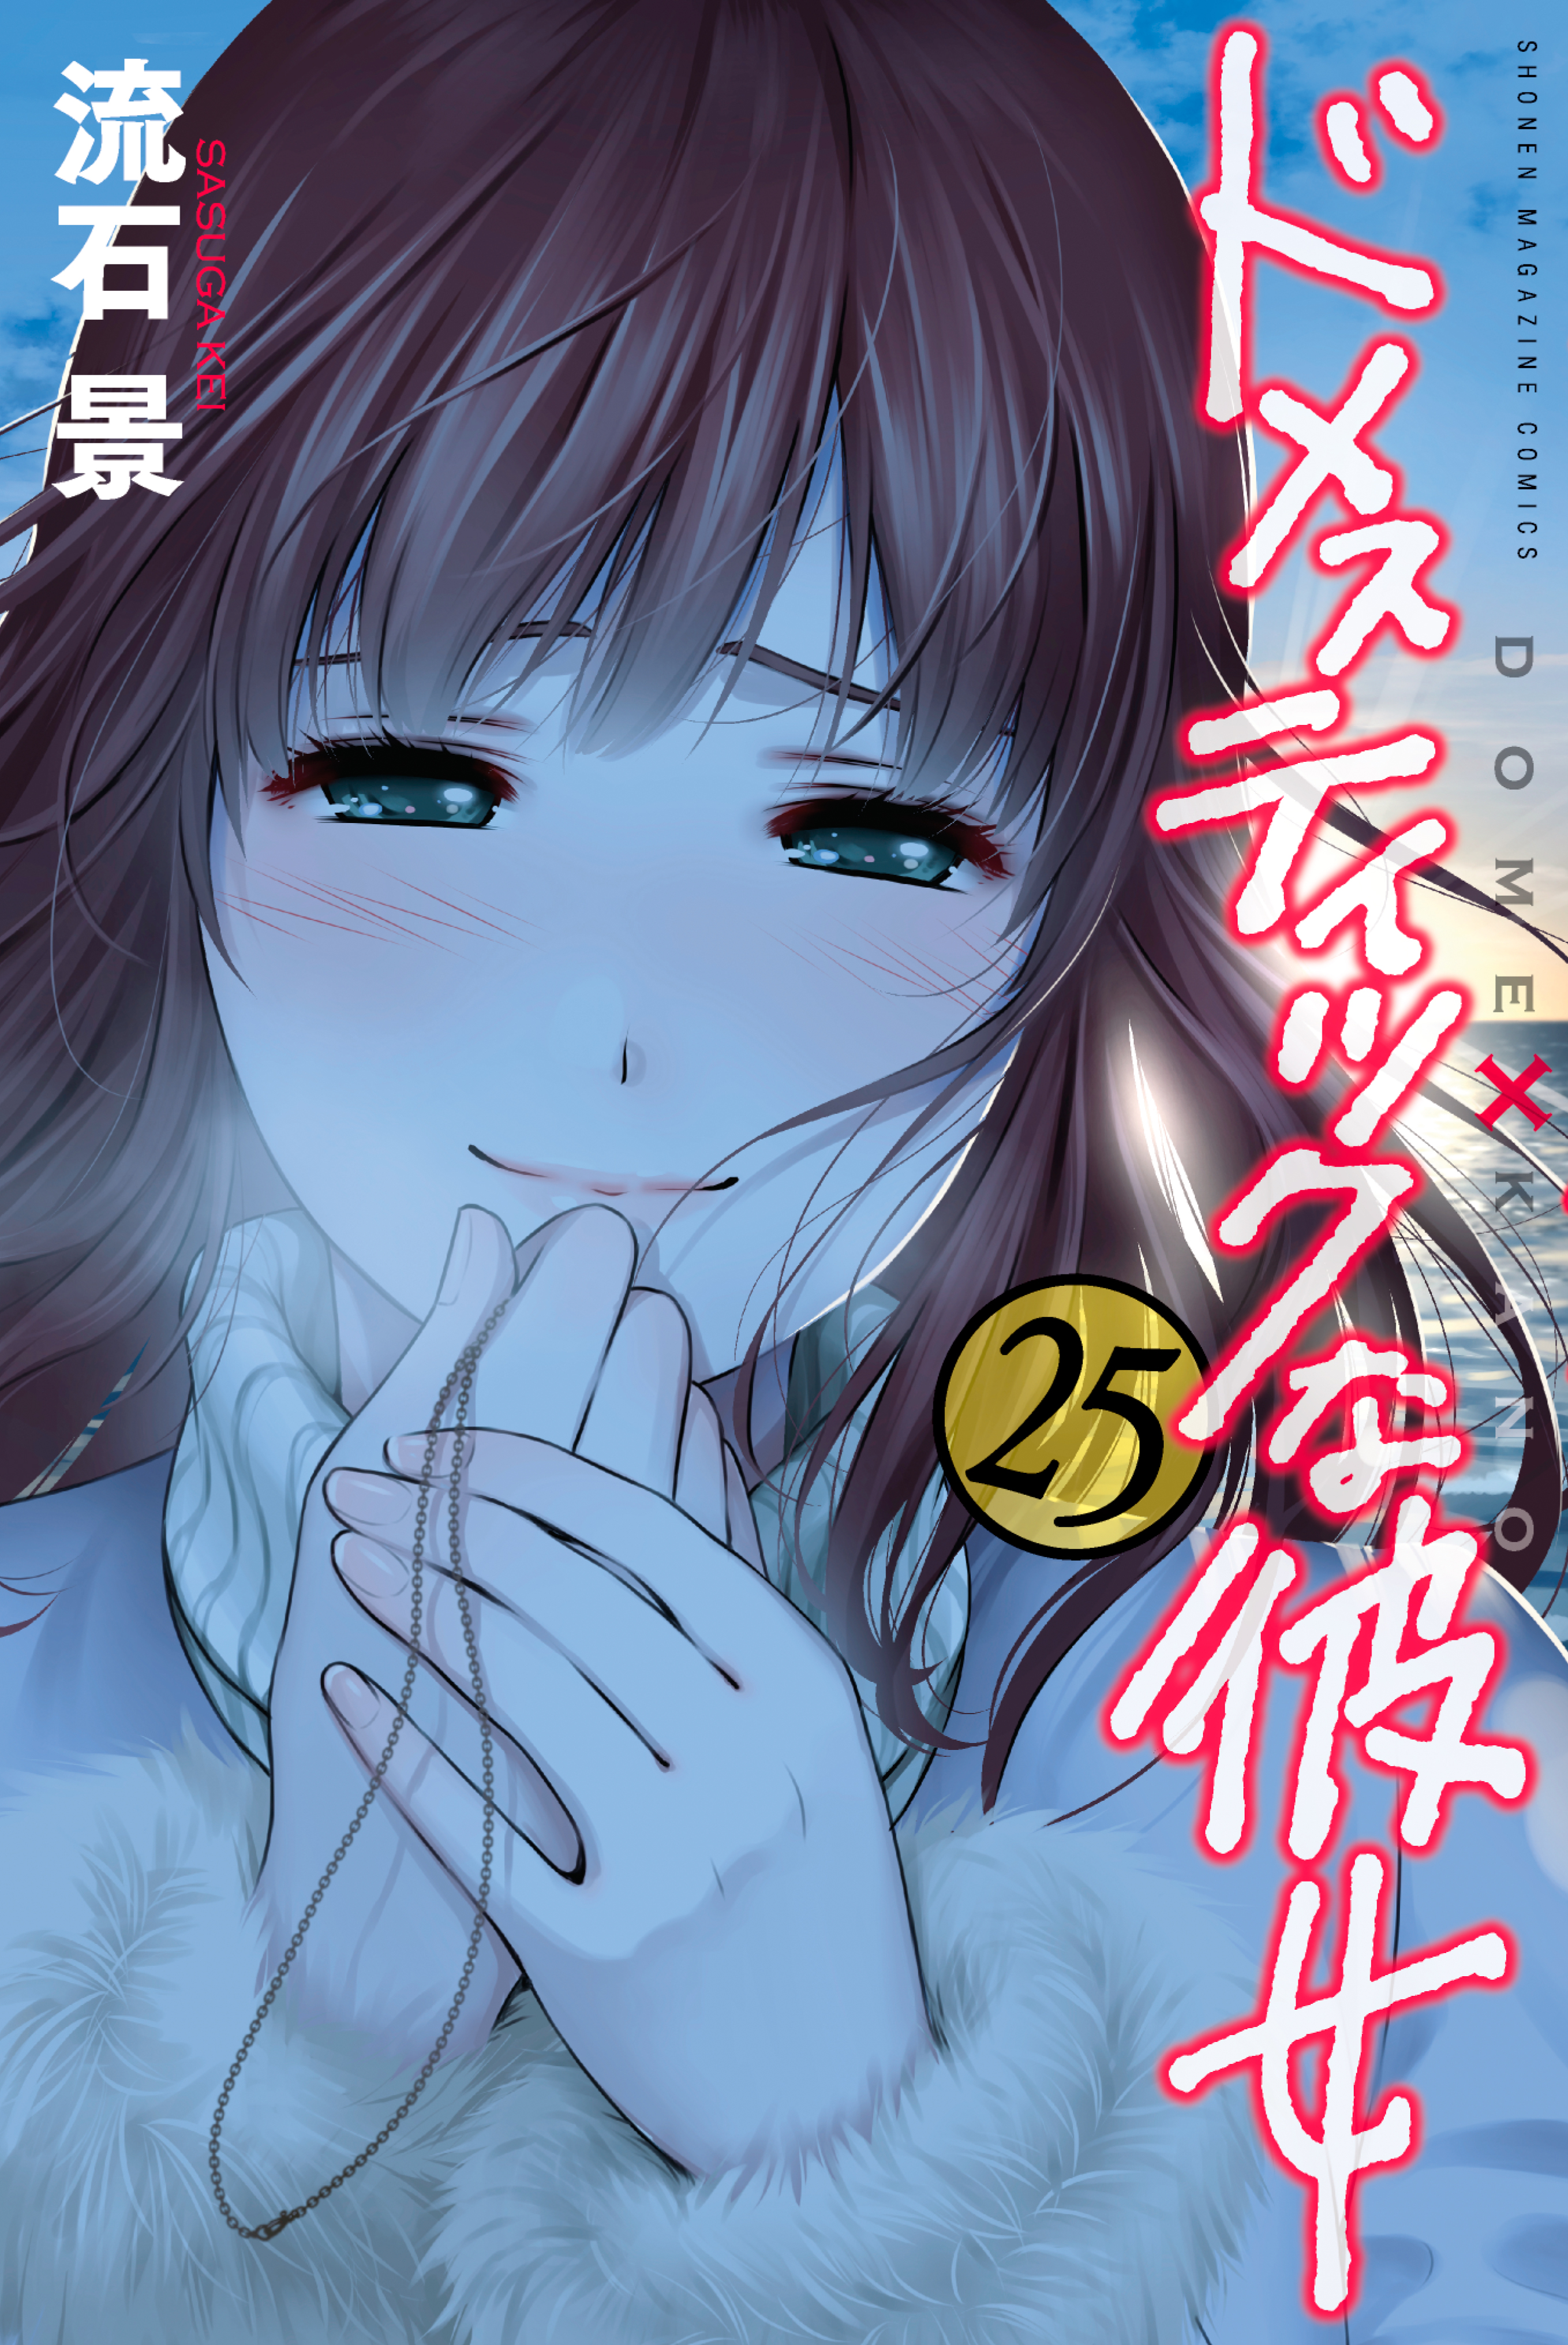 Domestic Girlfriend Volume 19 (Domestic na Kanojo) - Manga Store 